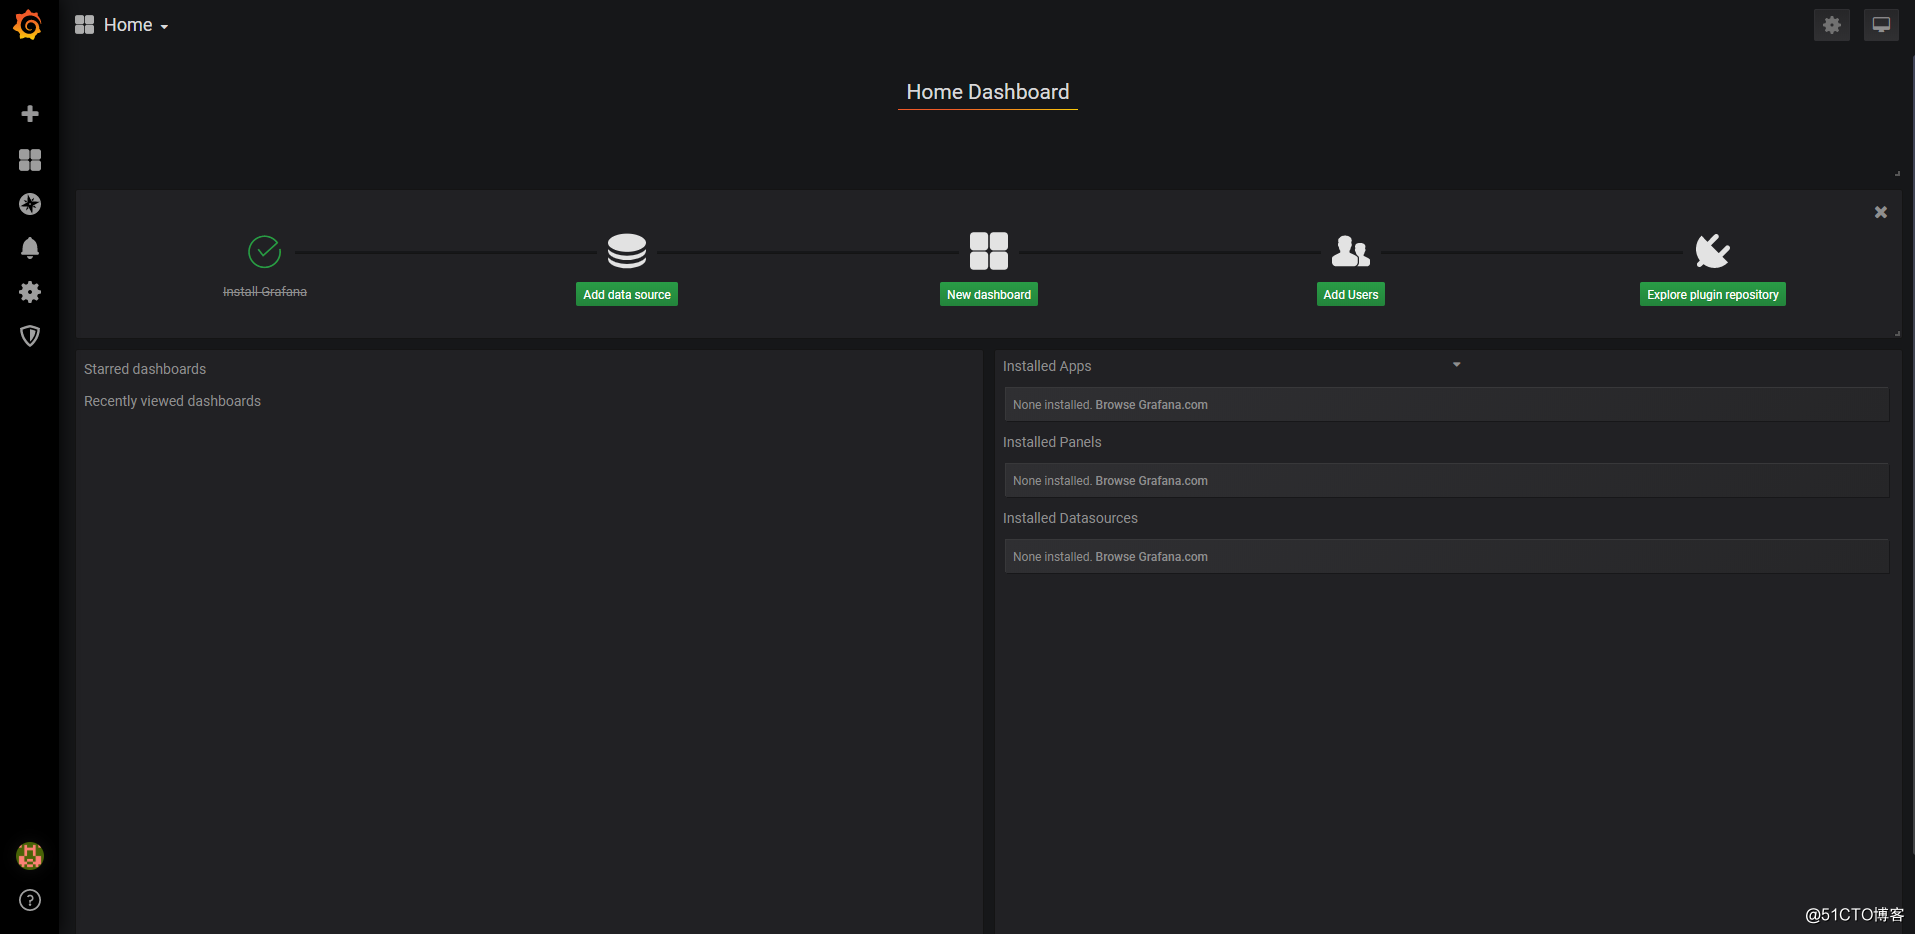 Actuator + Prometheus + Grafana build micro-service monitoring platform